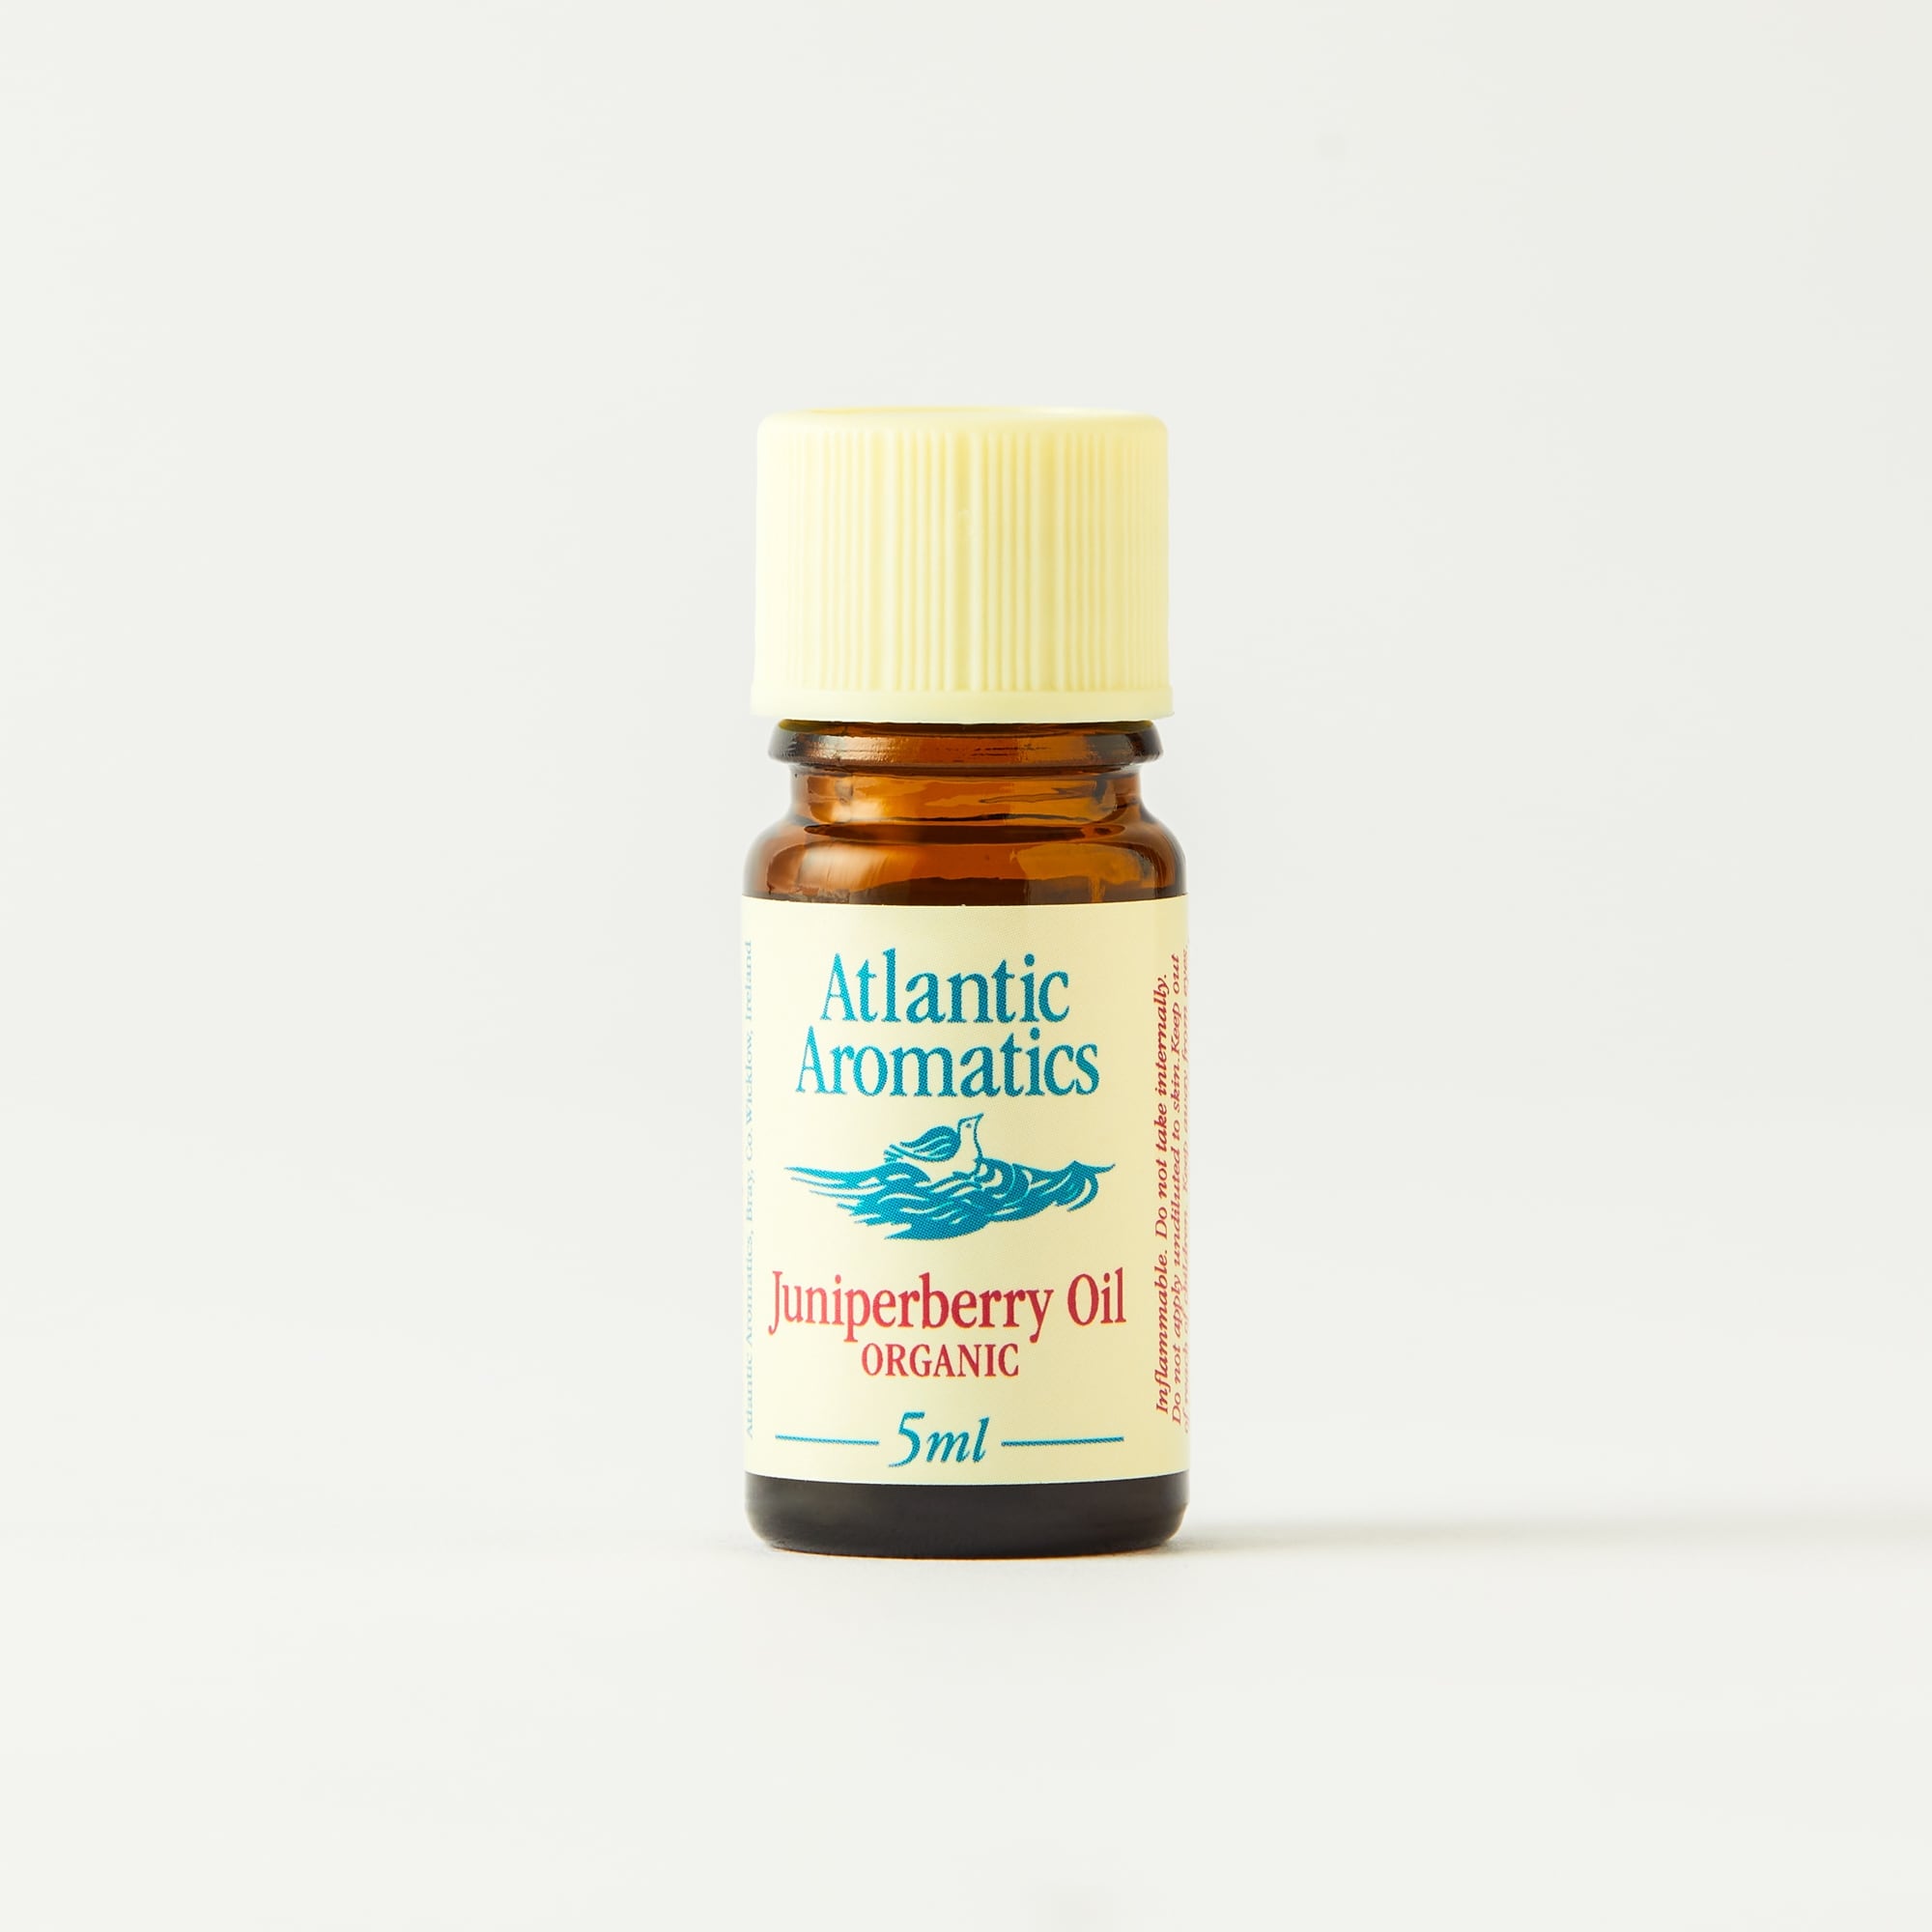 Atlantic Aromatics Organic Juniperberry Oil